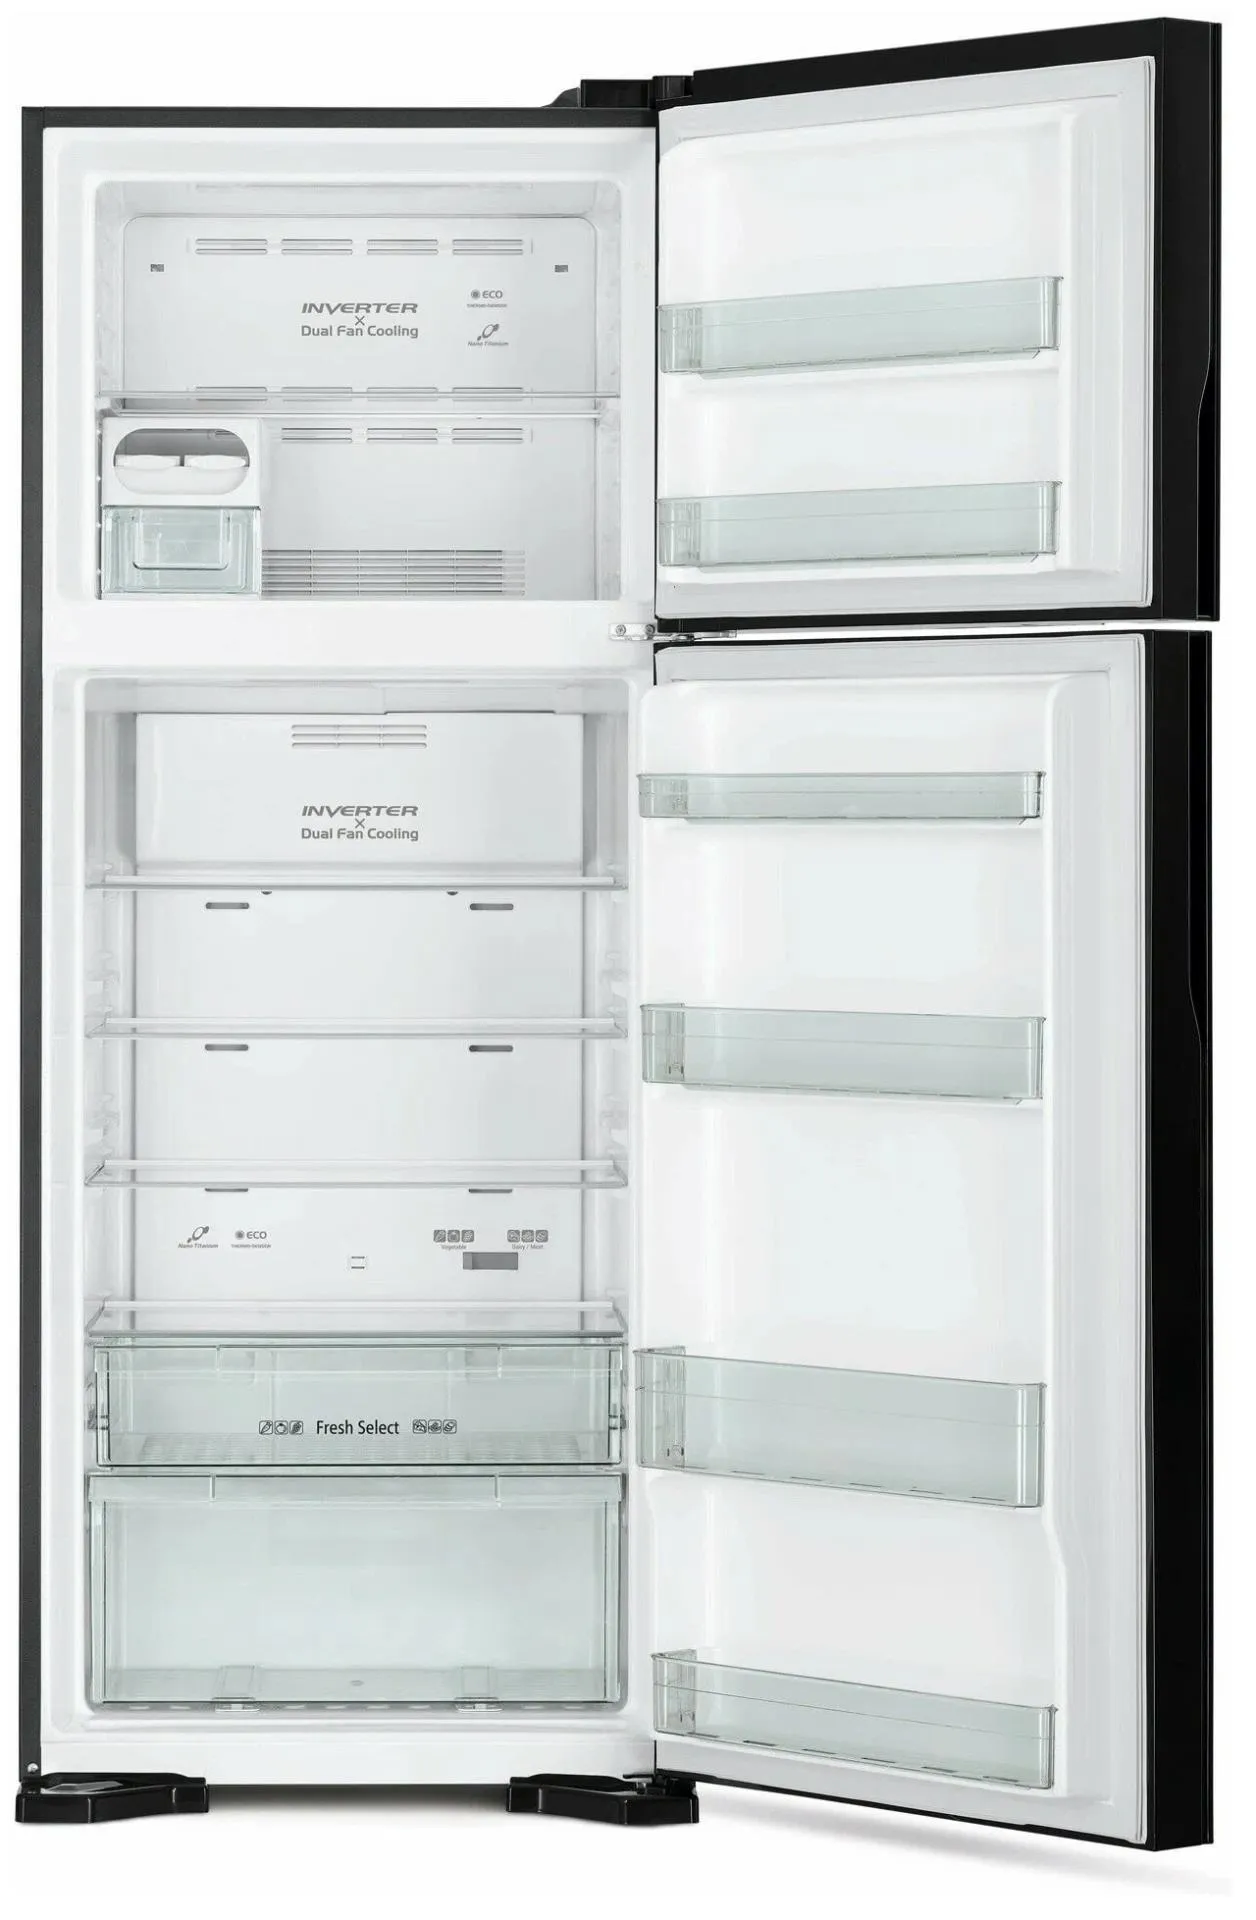 холодильник HITACHI R-VG 540 PUC7 GGR    серый